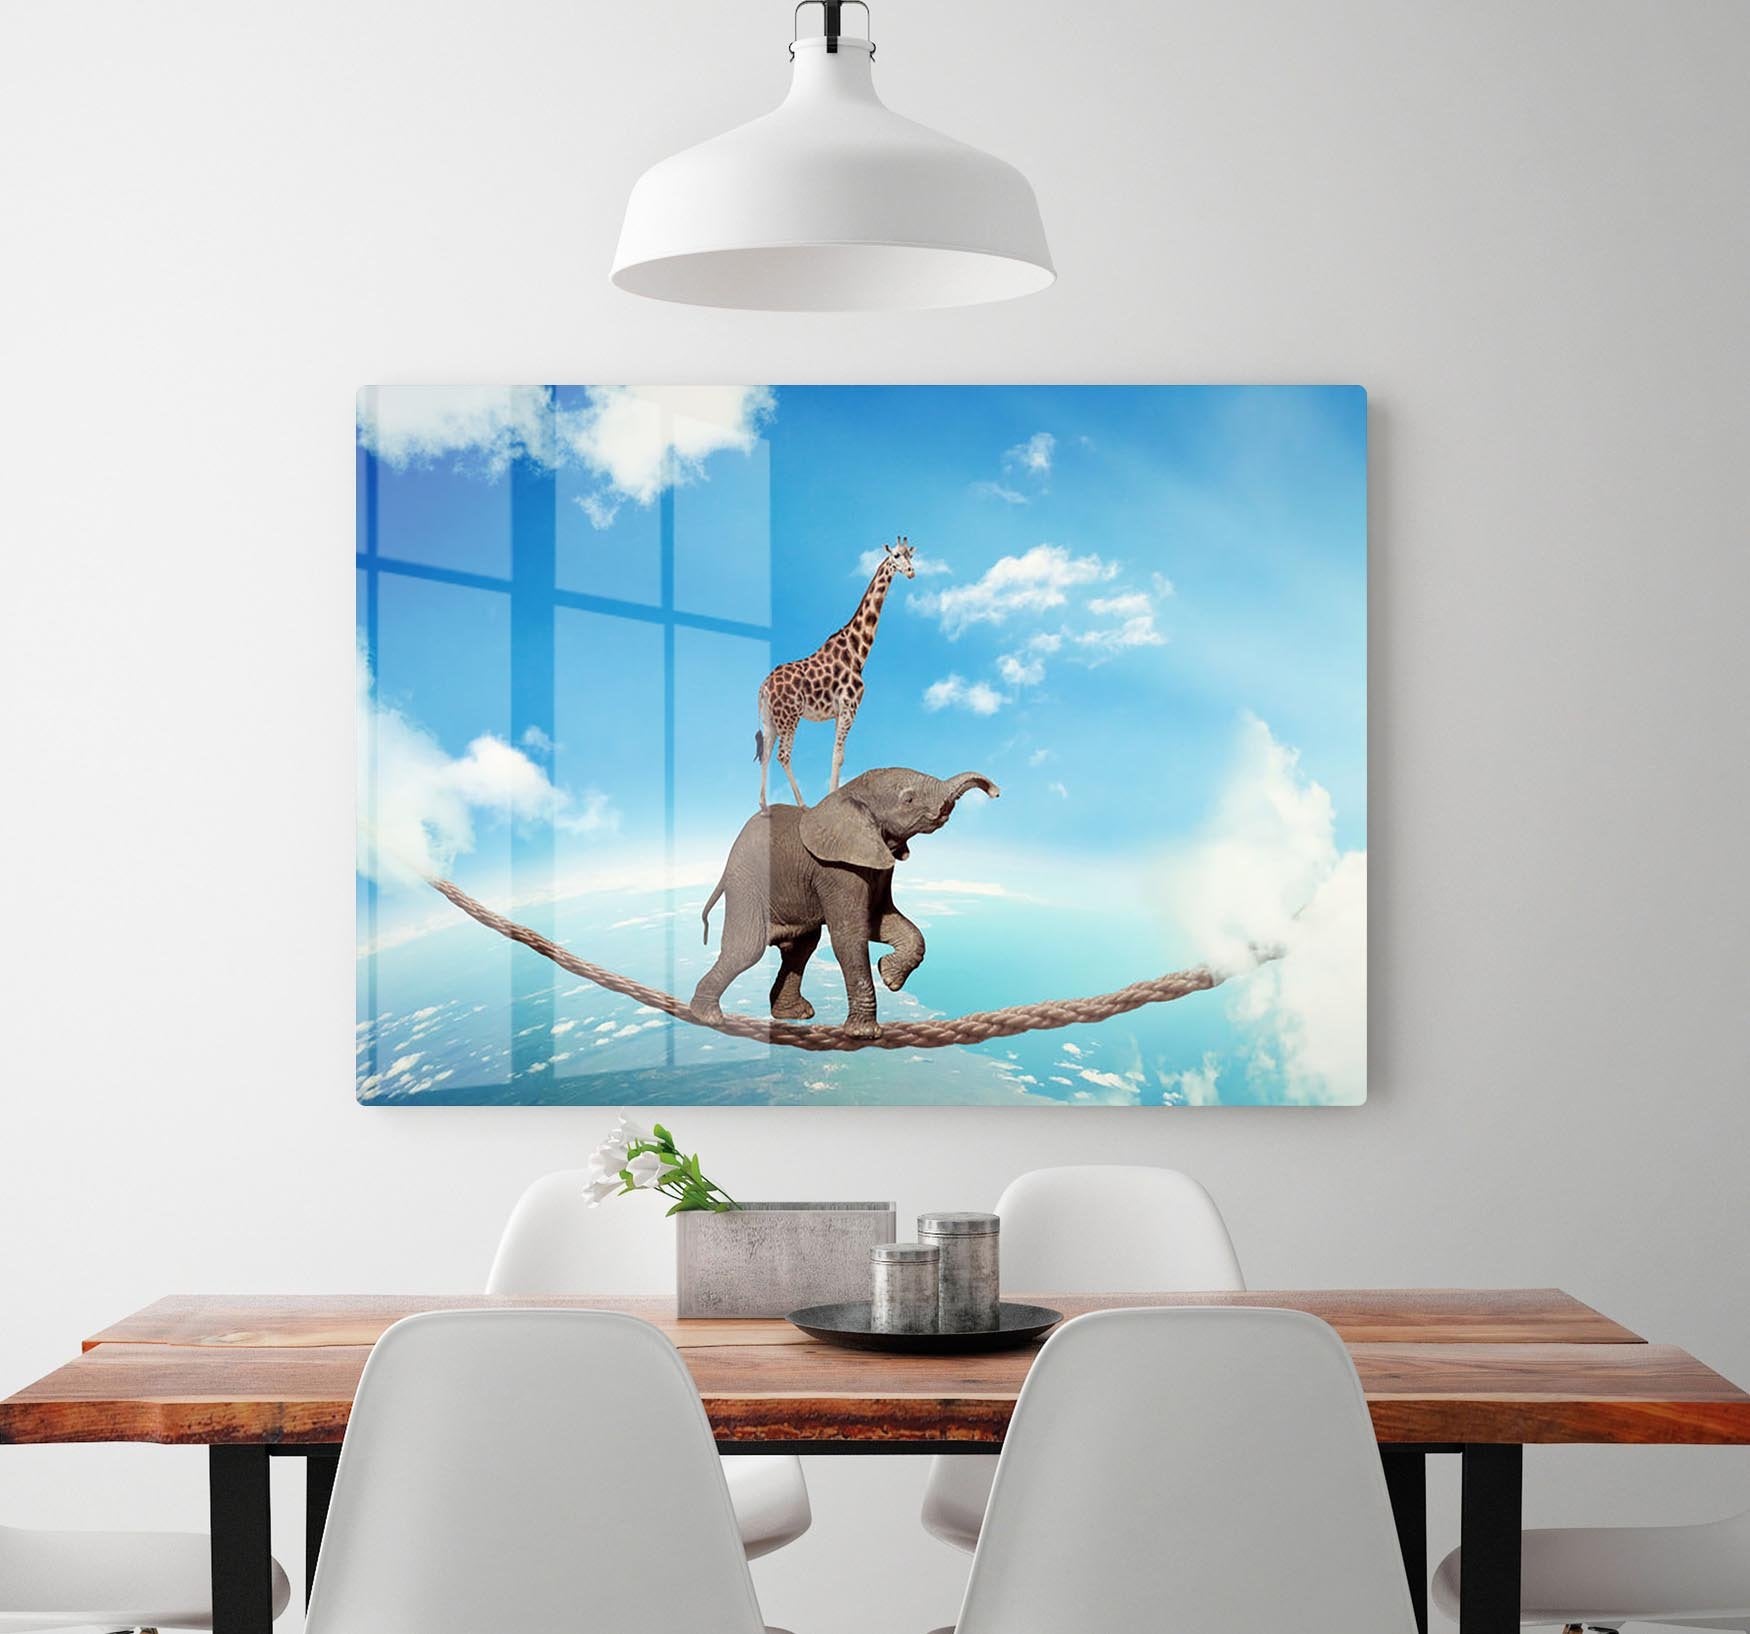 Elephant with giraffe walking on dangerous rope high in sky HD Metal Print - Canvas Art Rocks - 2